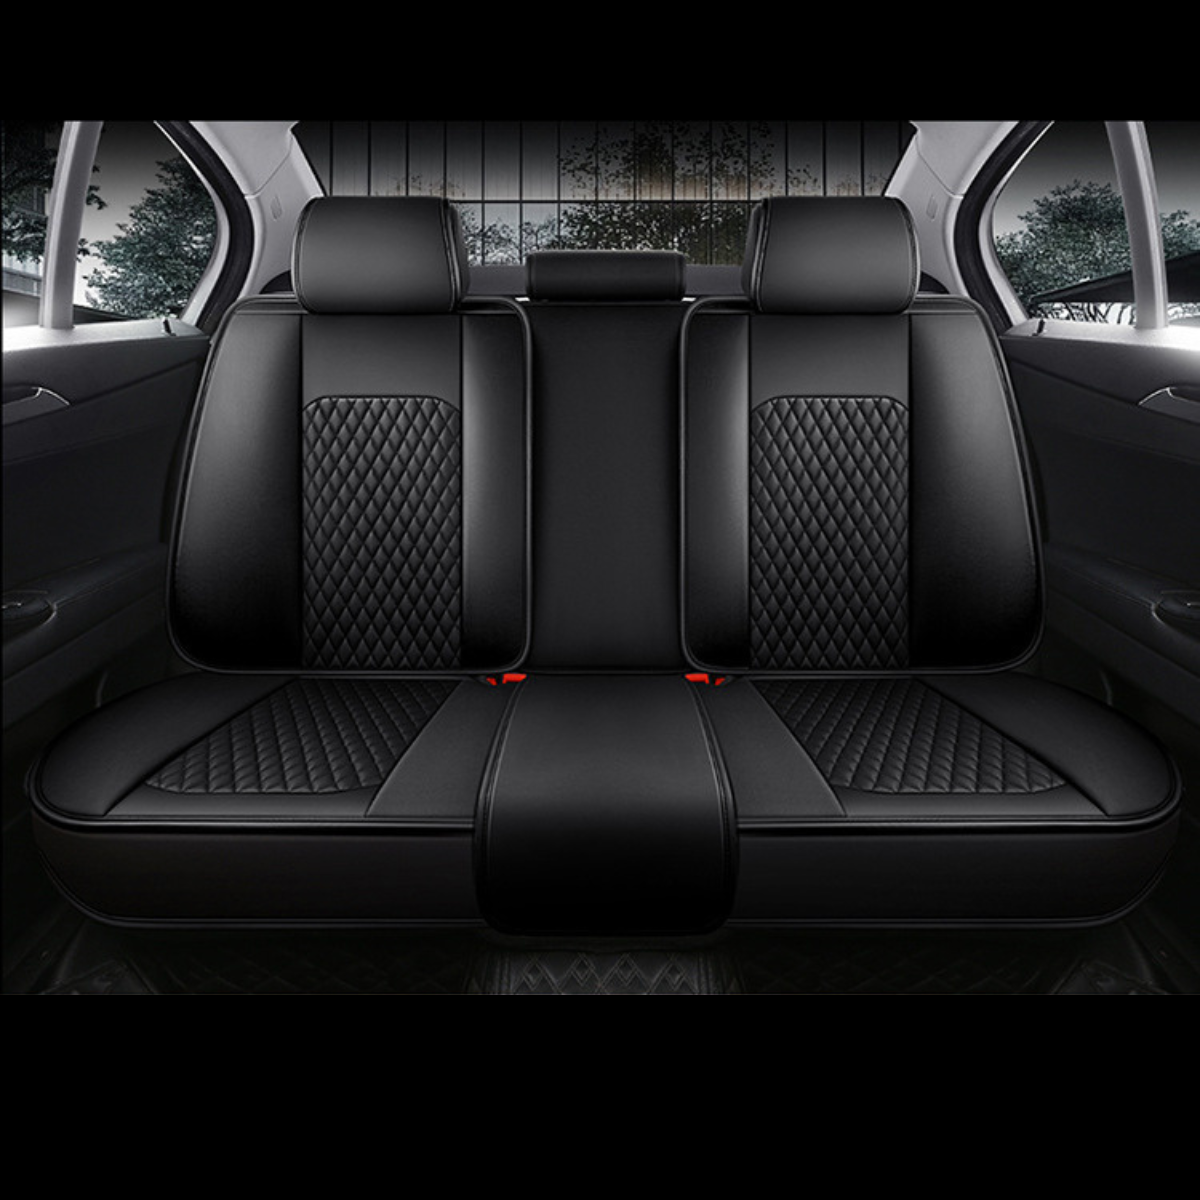 Black Universal Diamond Stitching Luxury Seat Covers